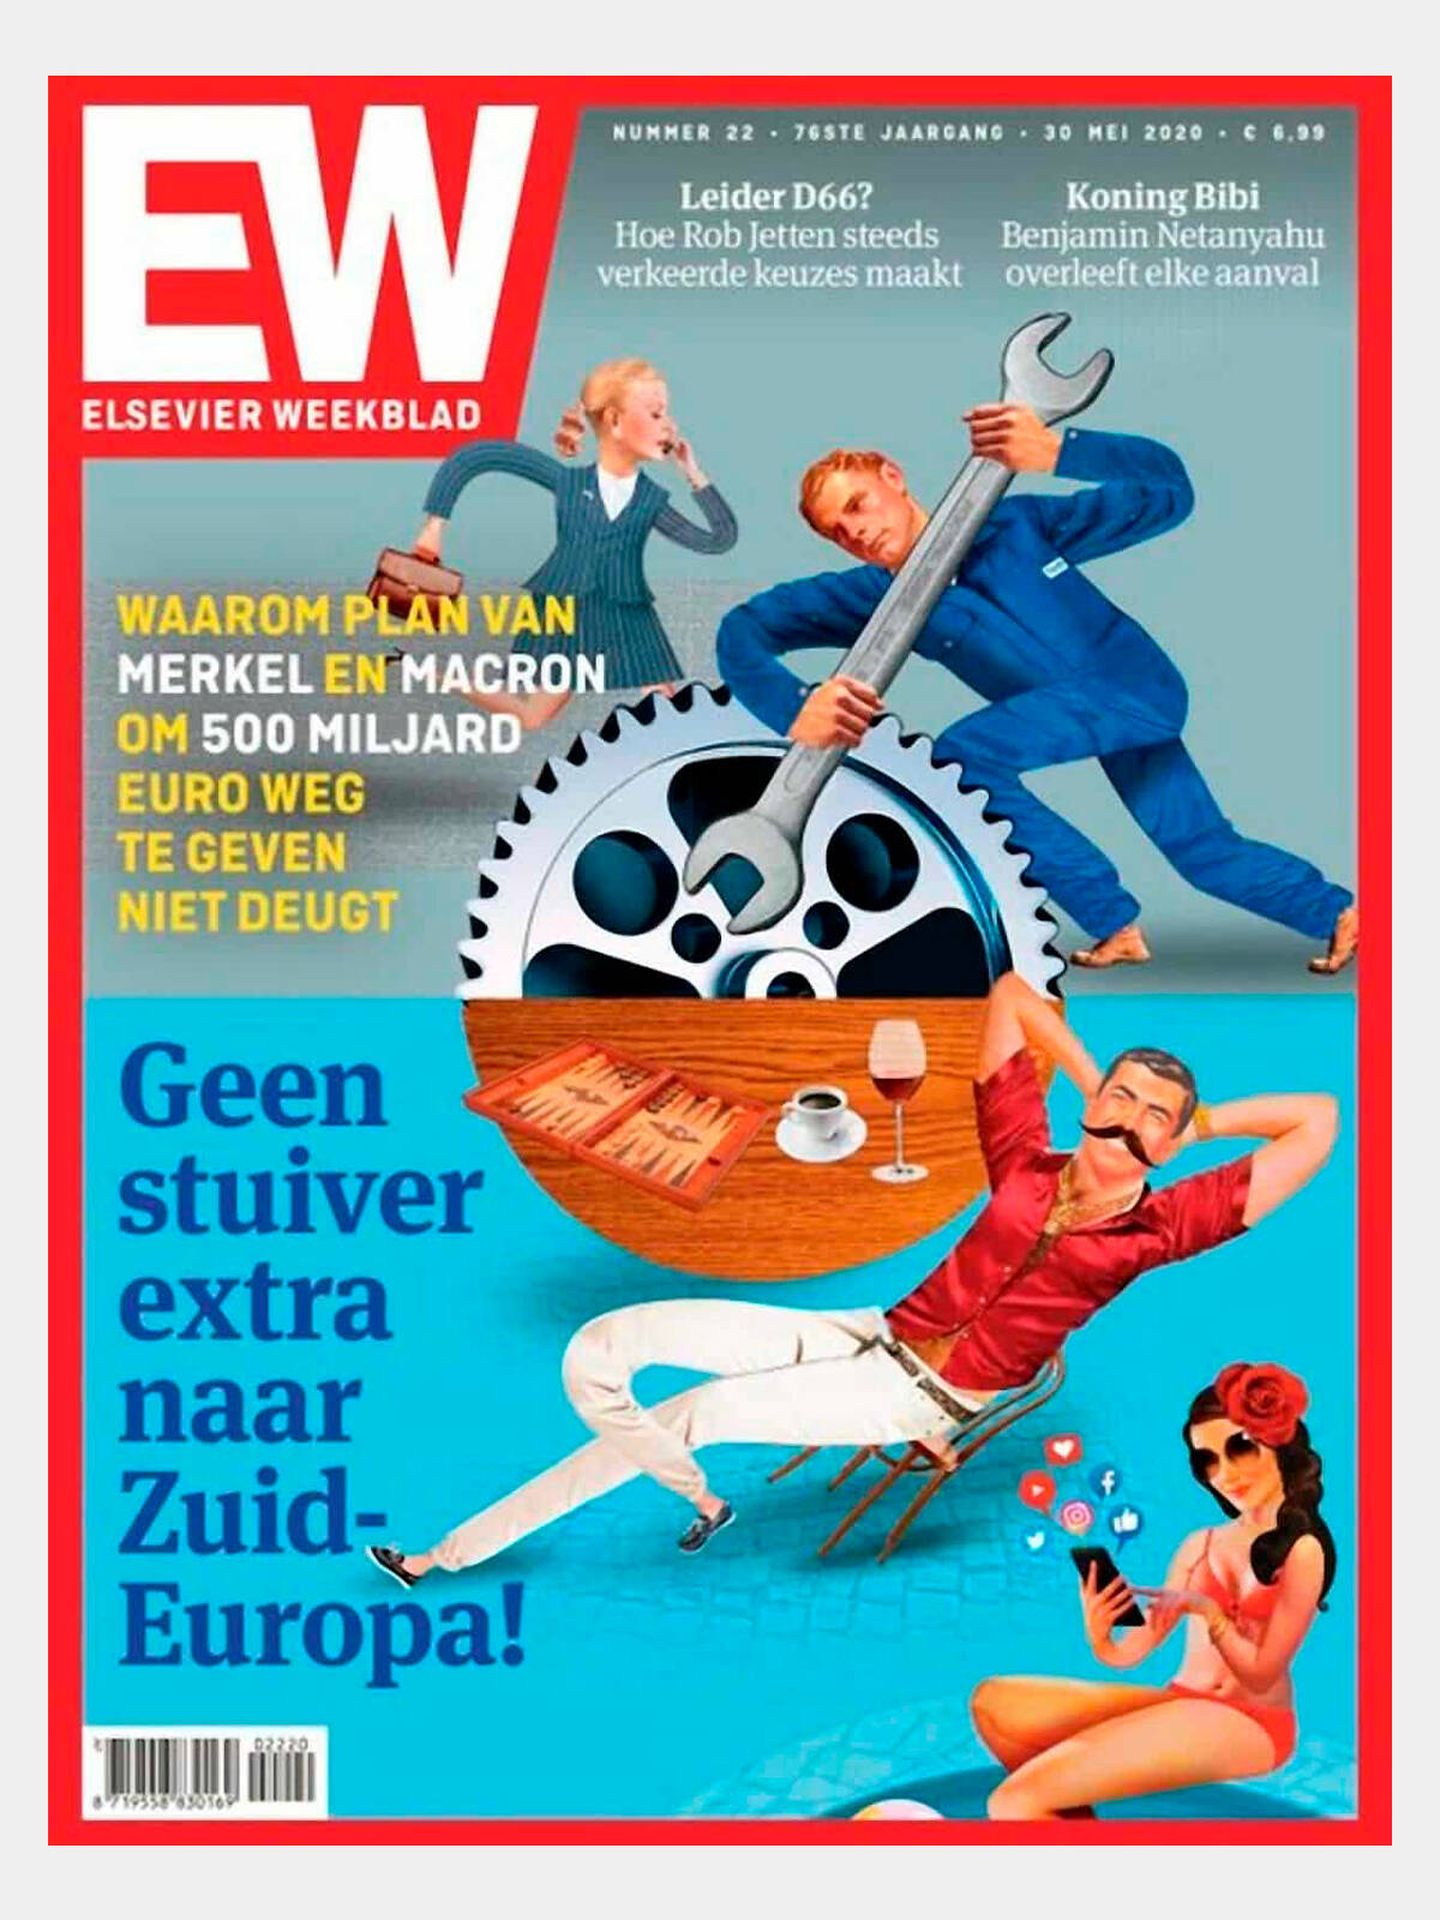 La polémica portada del 'Elsevier Weekblad'.